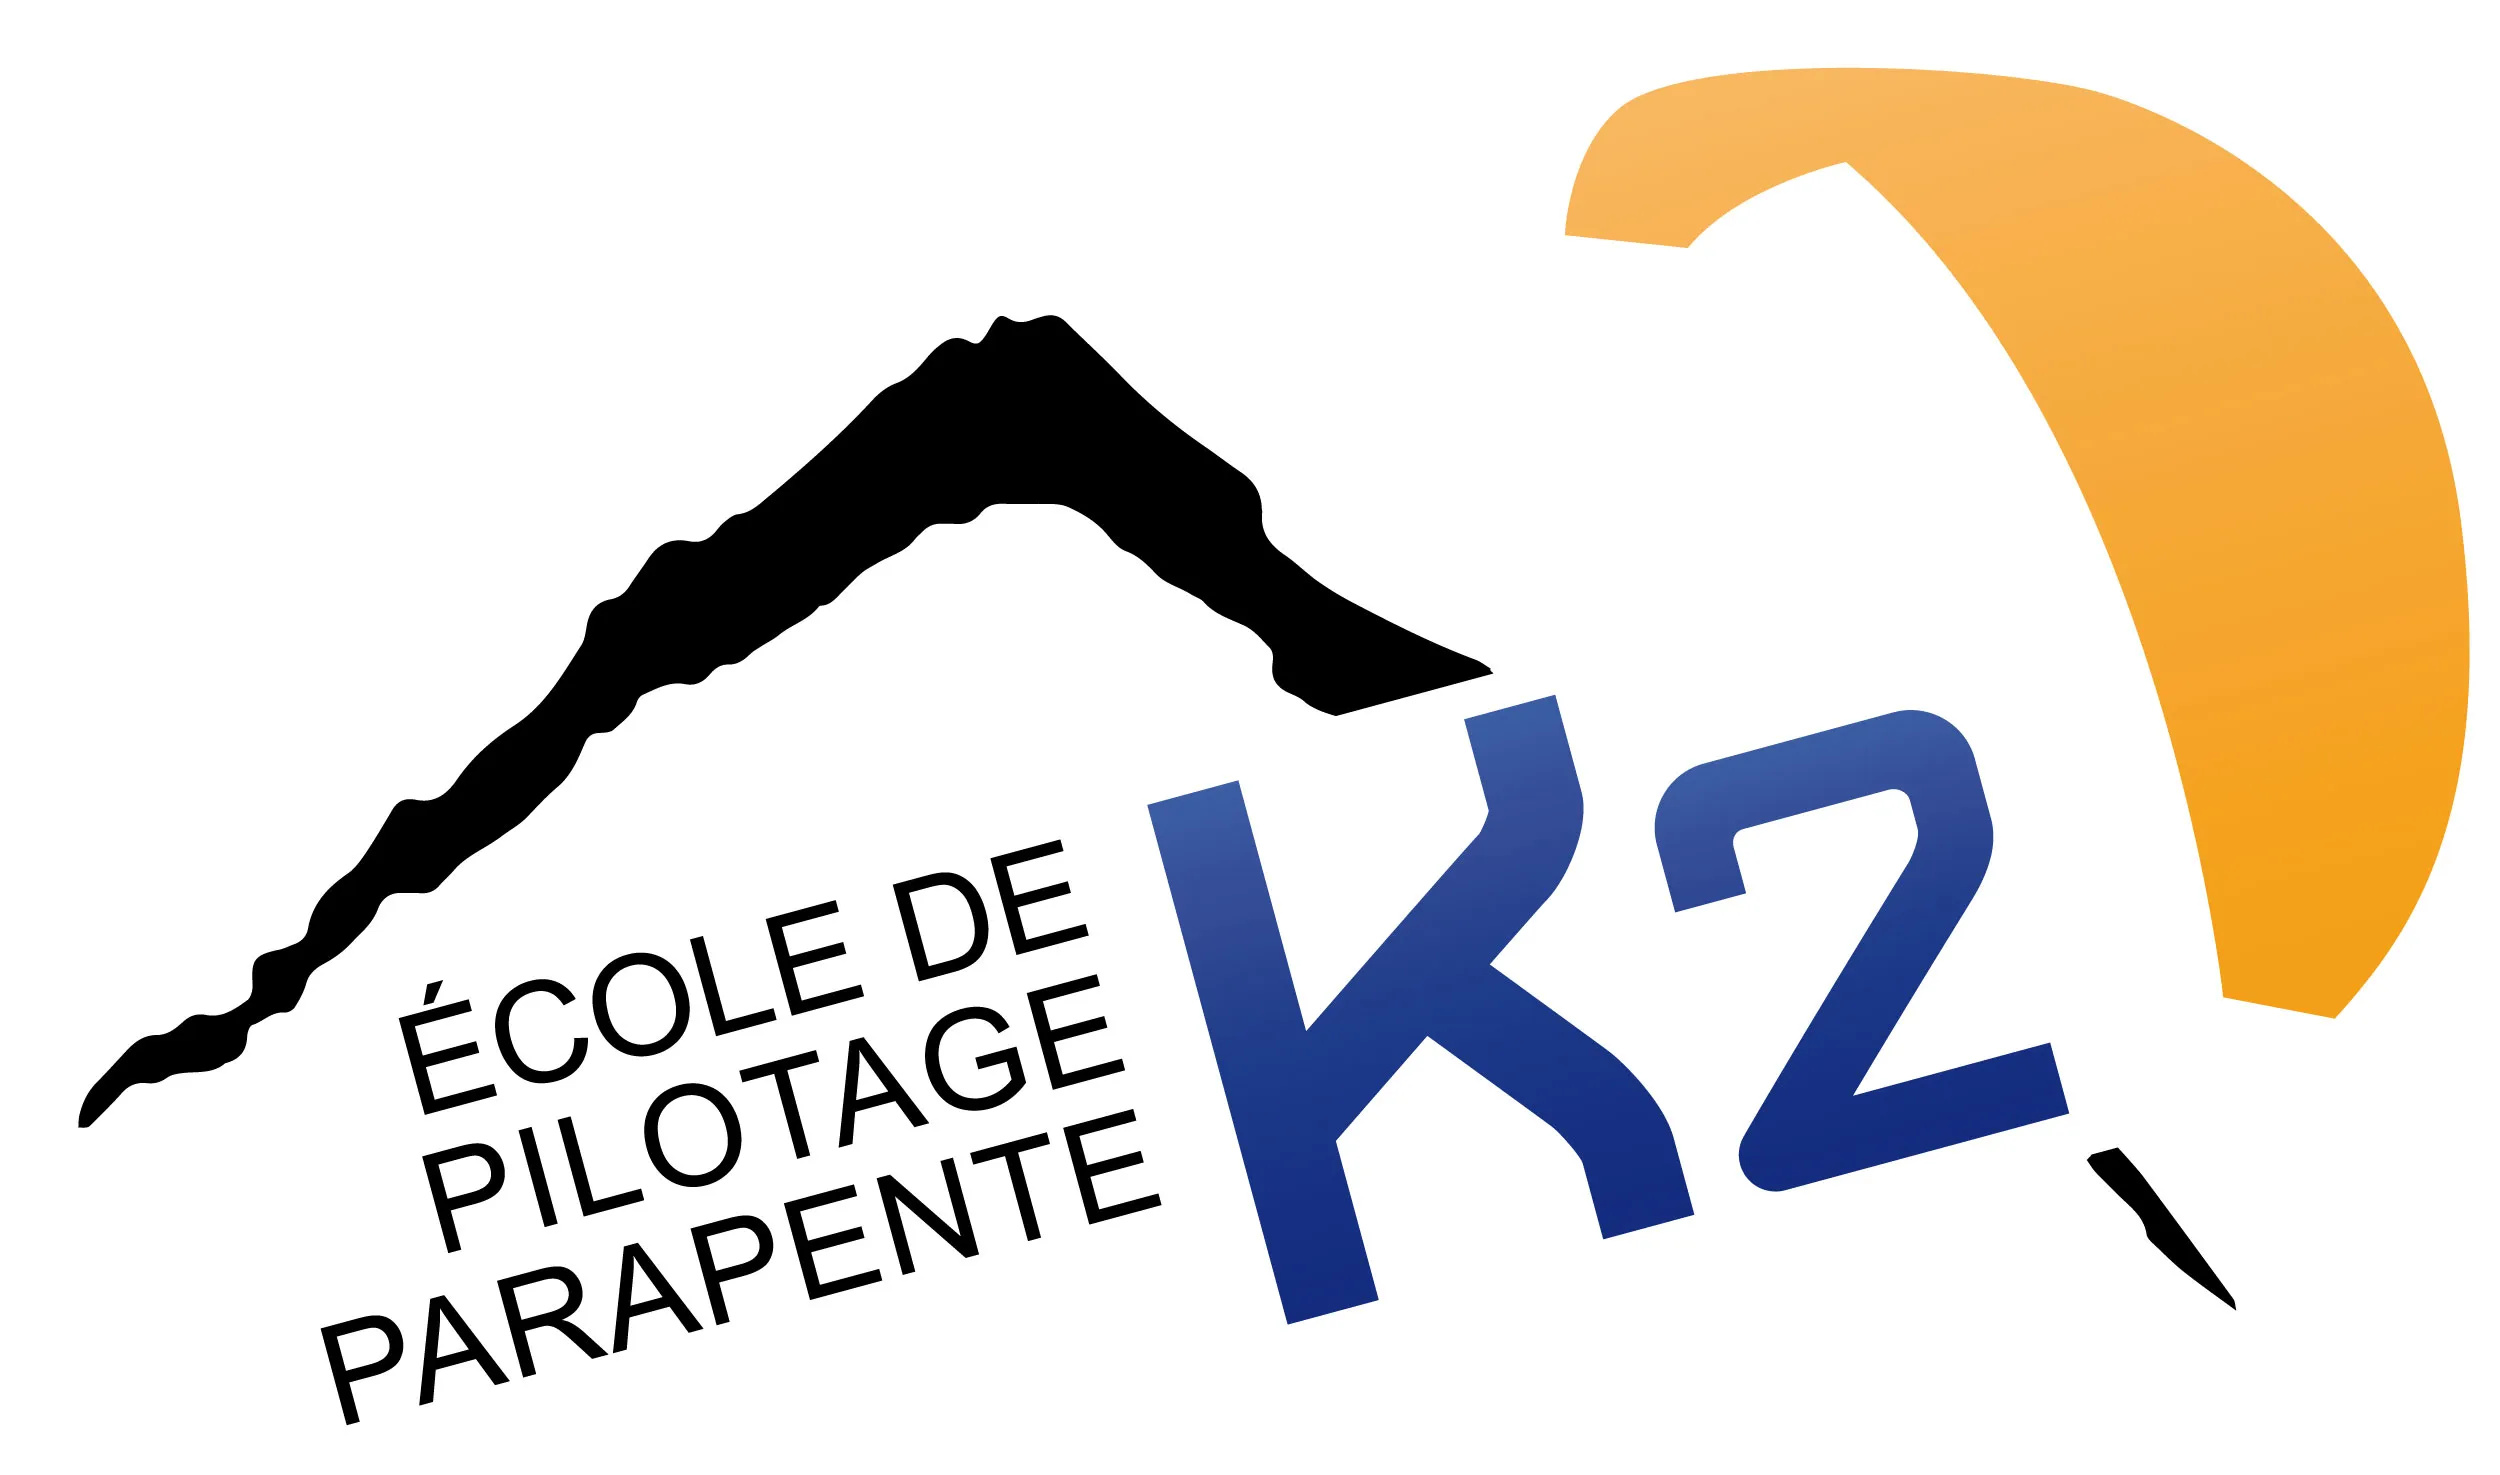 K2 logo.jpg